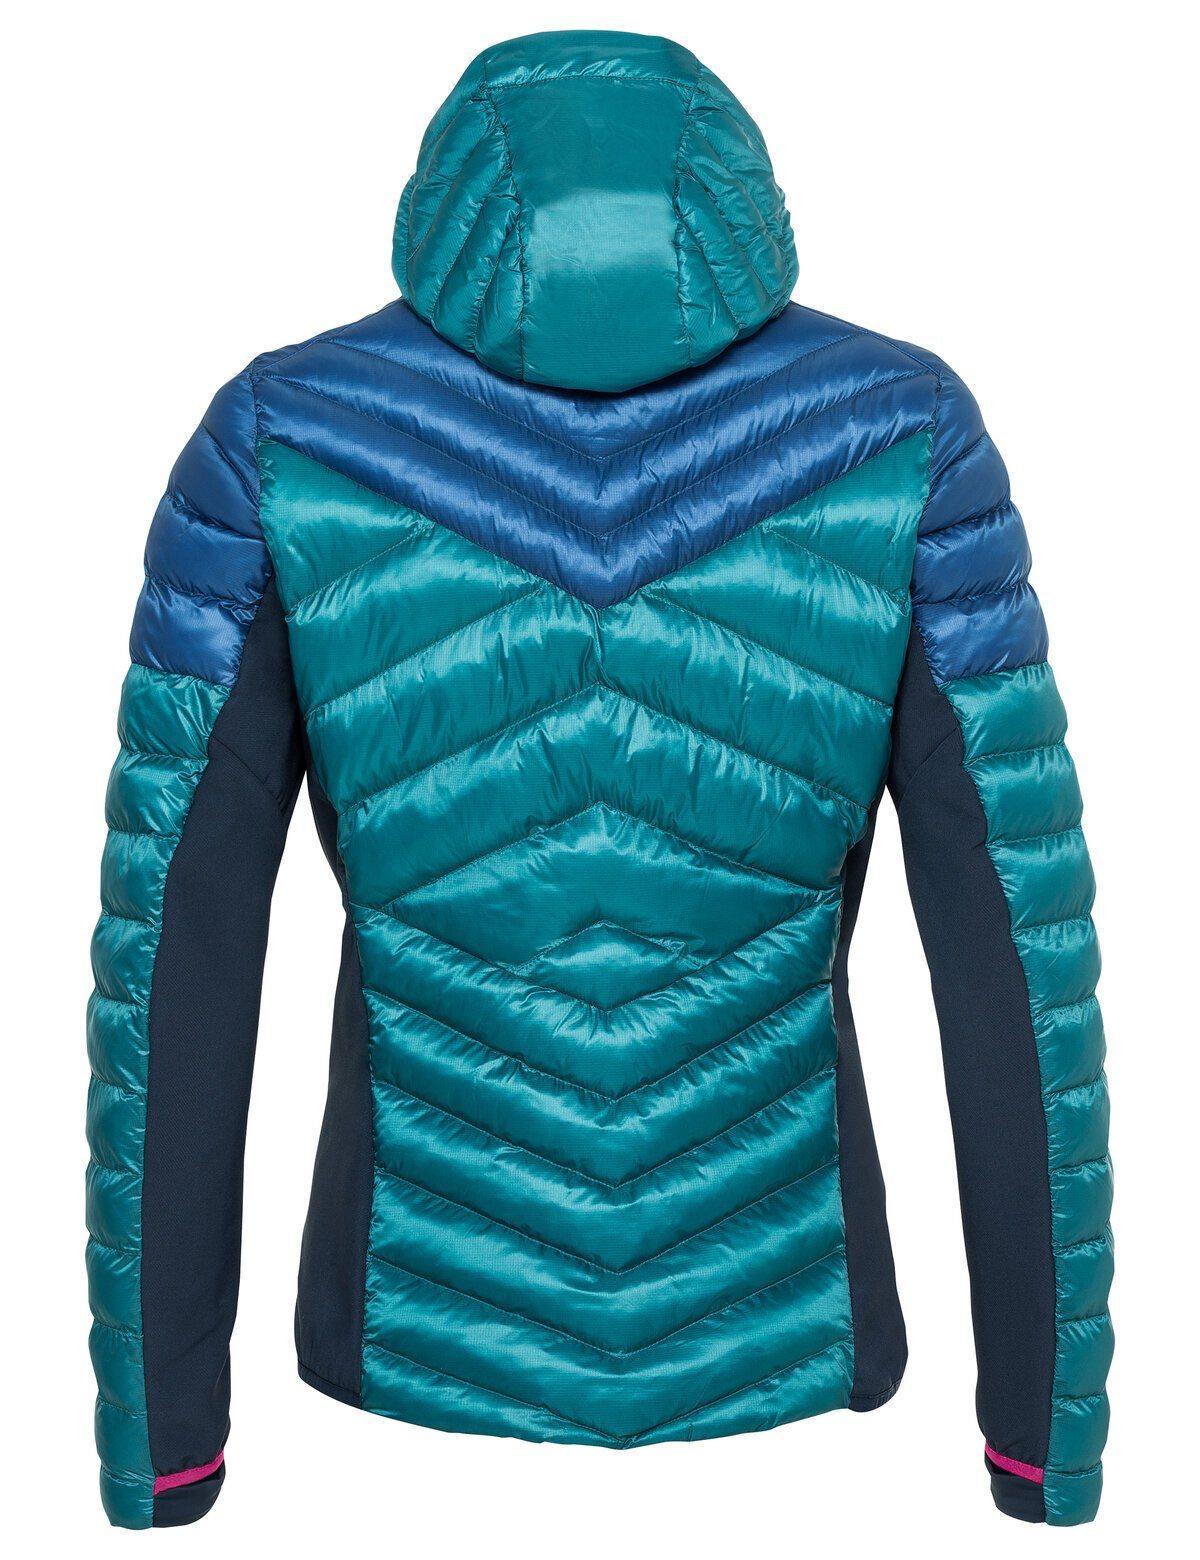 Pro II Sesvenna VAUDE Jacket Outdoorjacke kompensiert ultramarine Women's Klimaneutral (1-St)